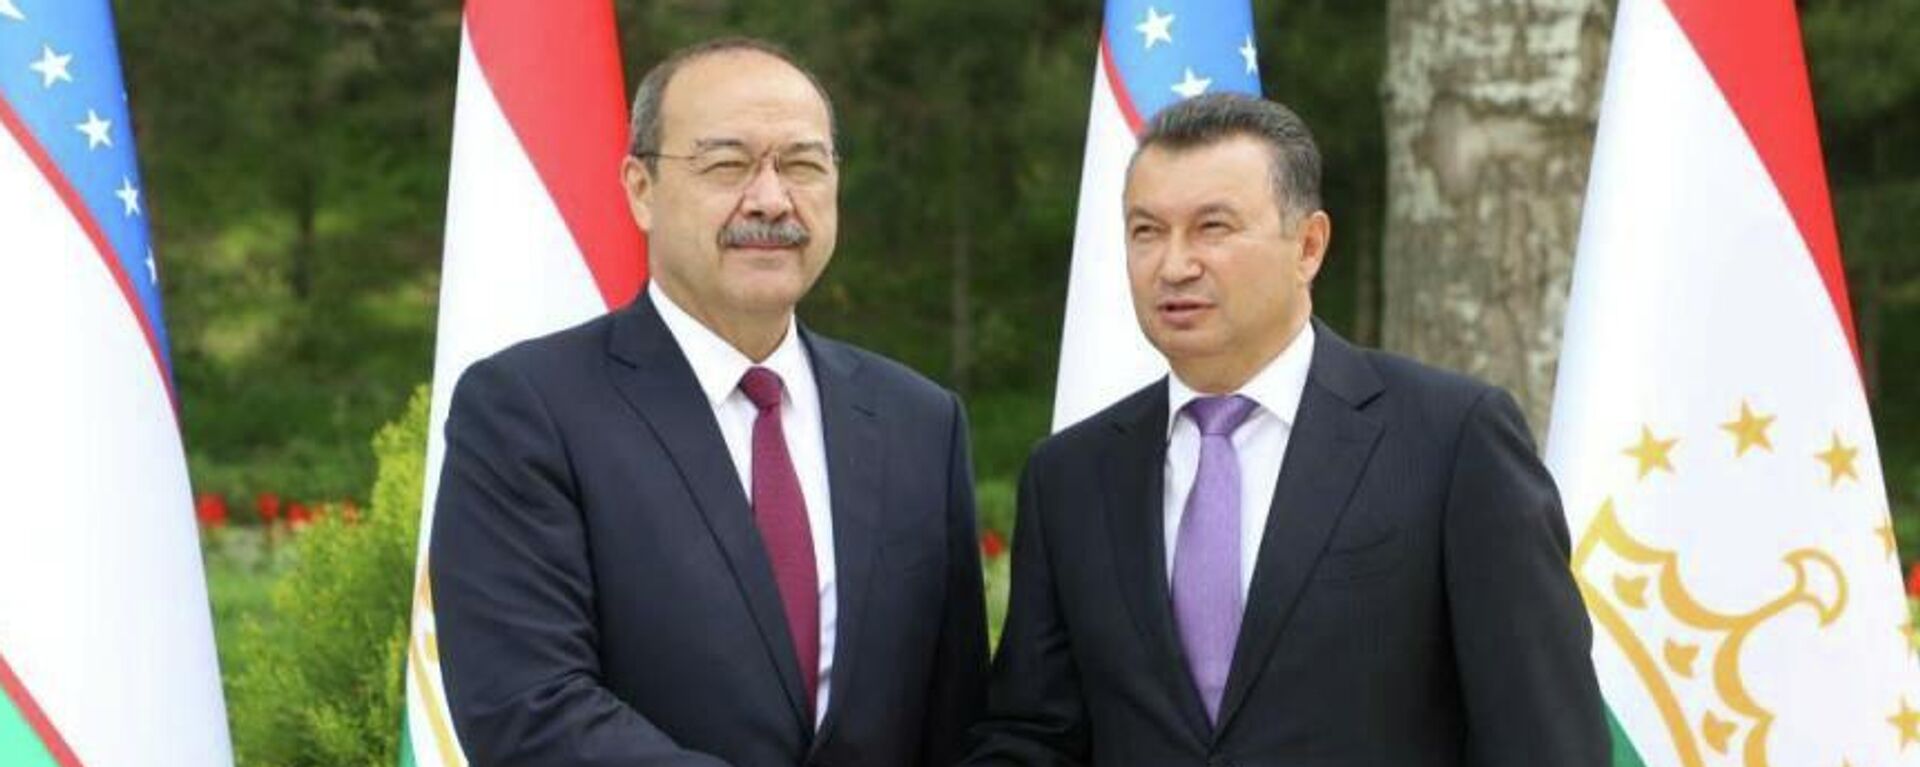 Премьер-министр Республики Узбекистан Абдулла Арипов и премьер-министр Таджикистана Кохир Расулзода - Sputnik Таджикистан, 1920, 26.04.2021